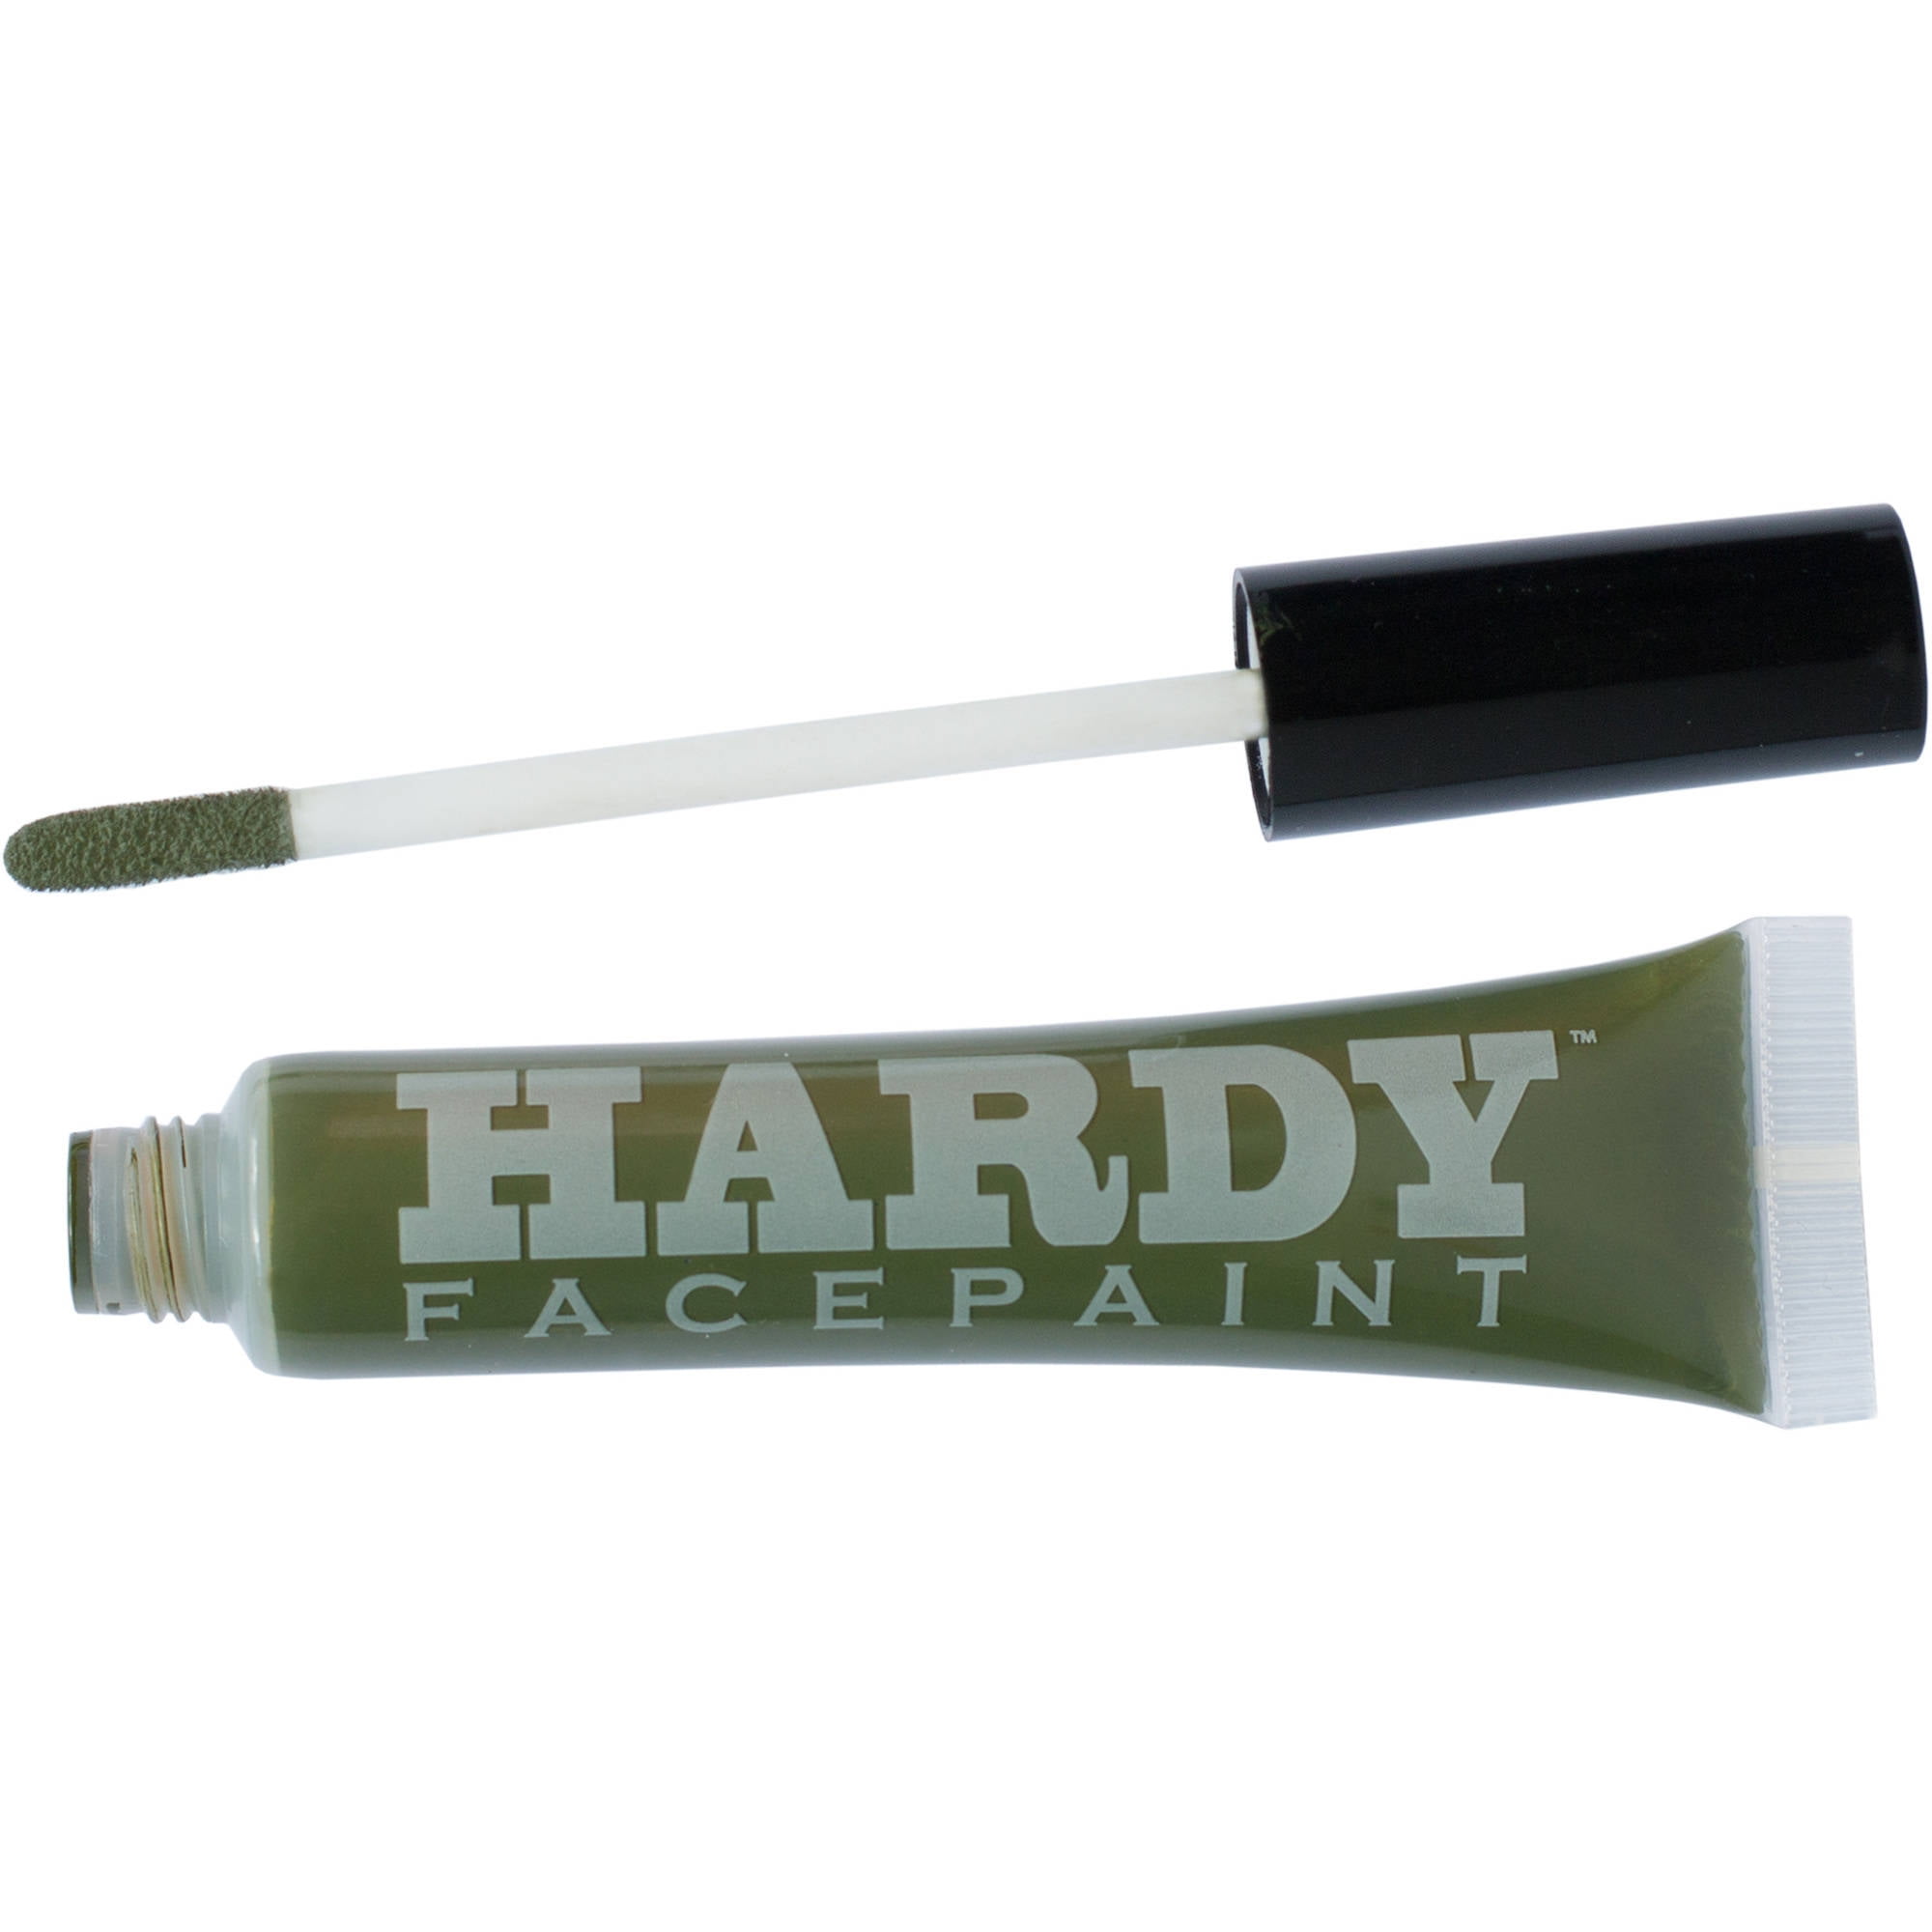 HARDY Facepaint – Wild Habit